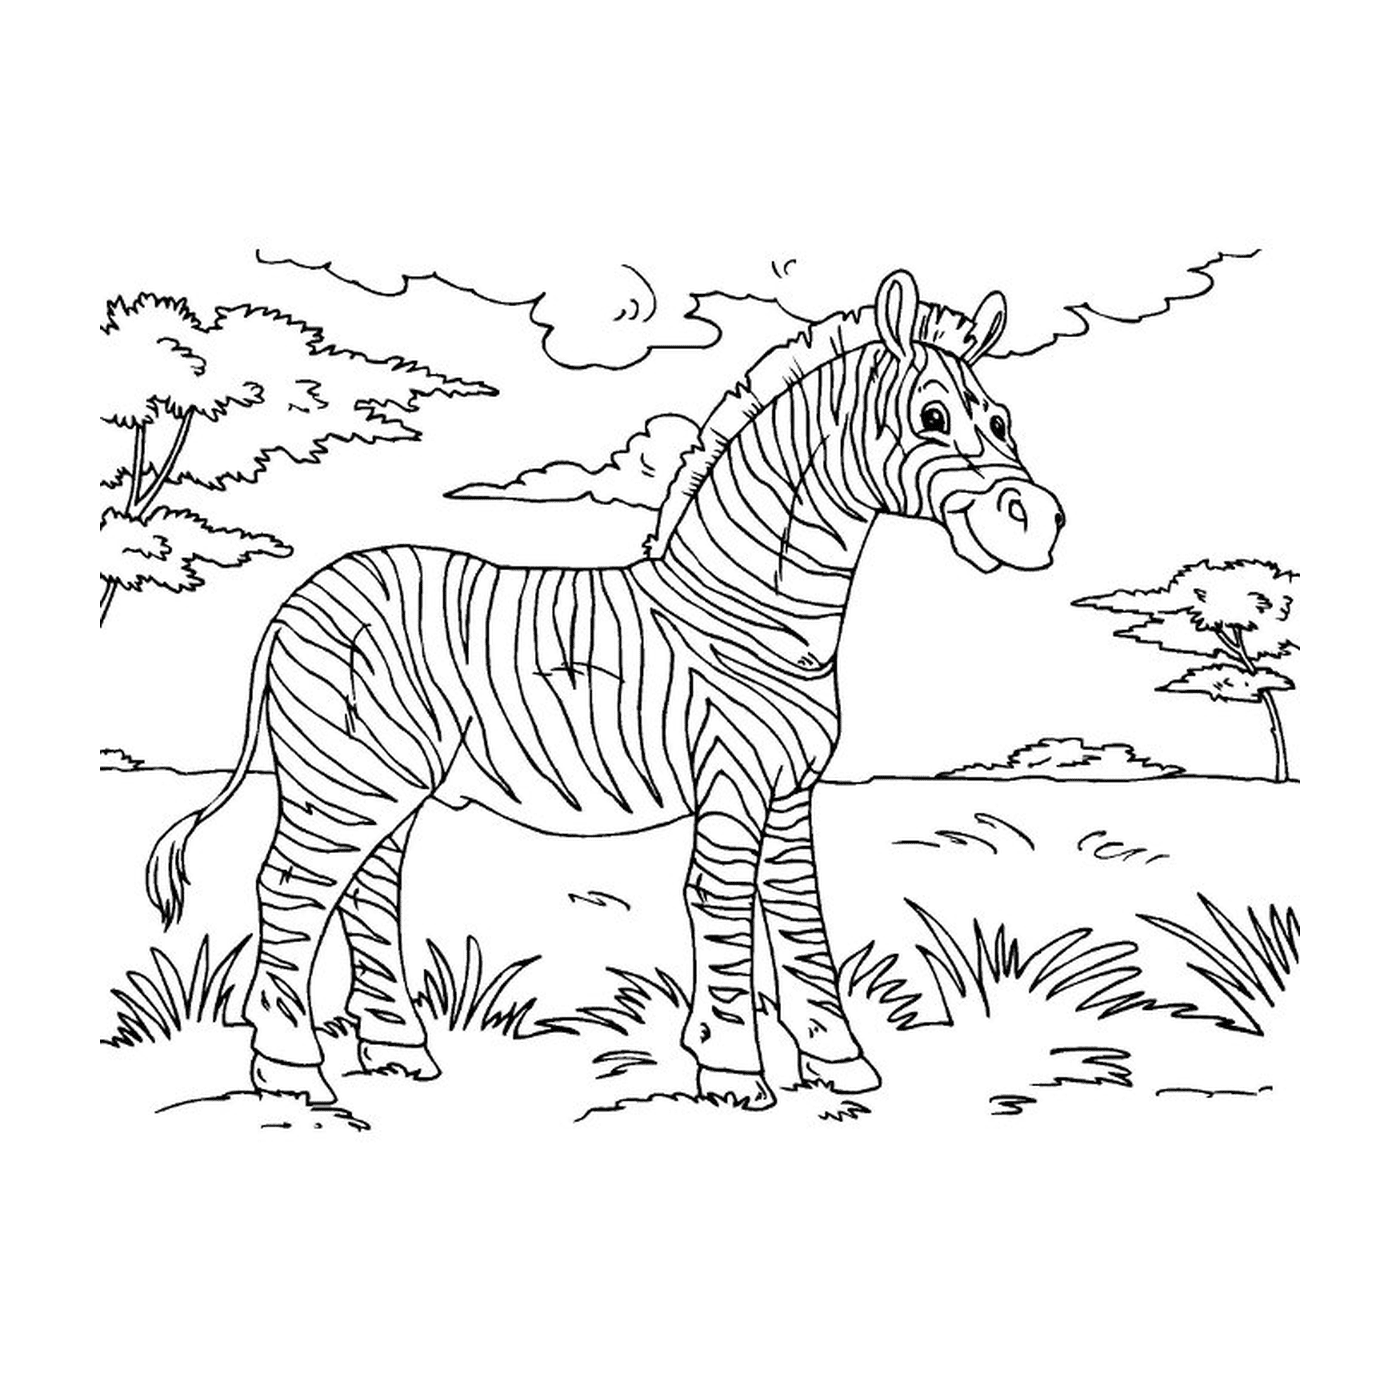  Zebra pacifica in natura 